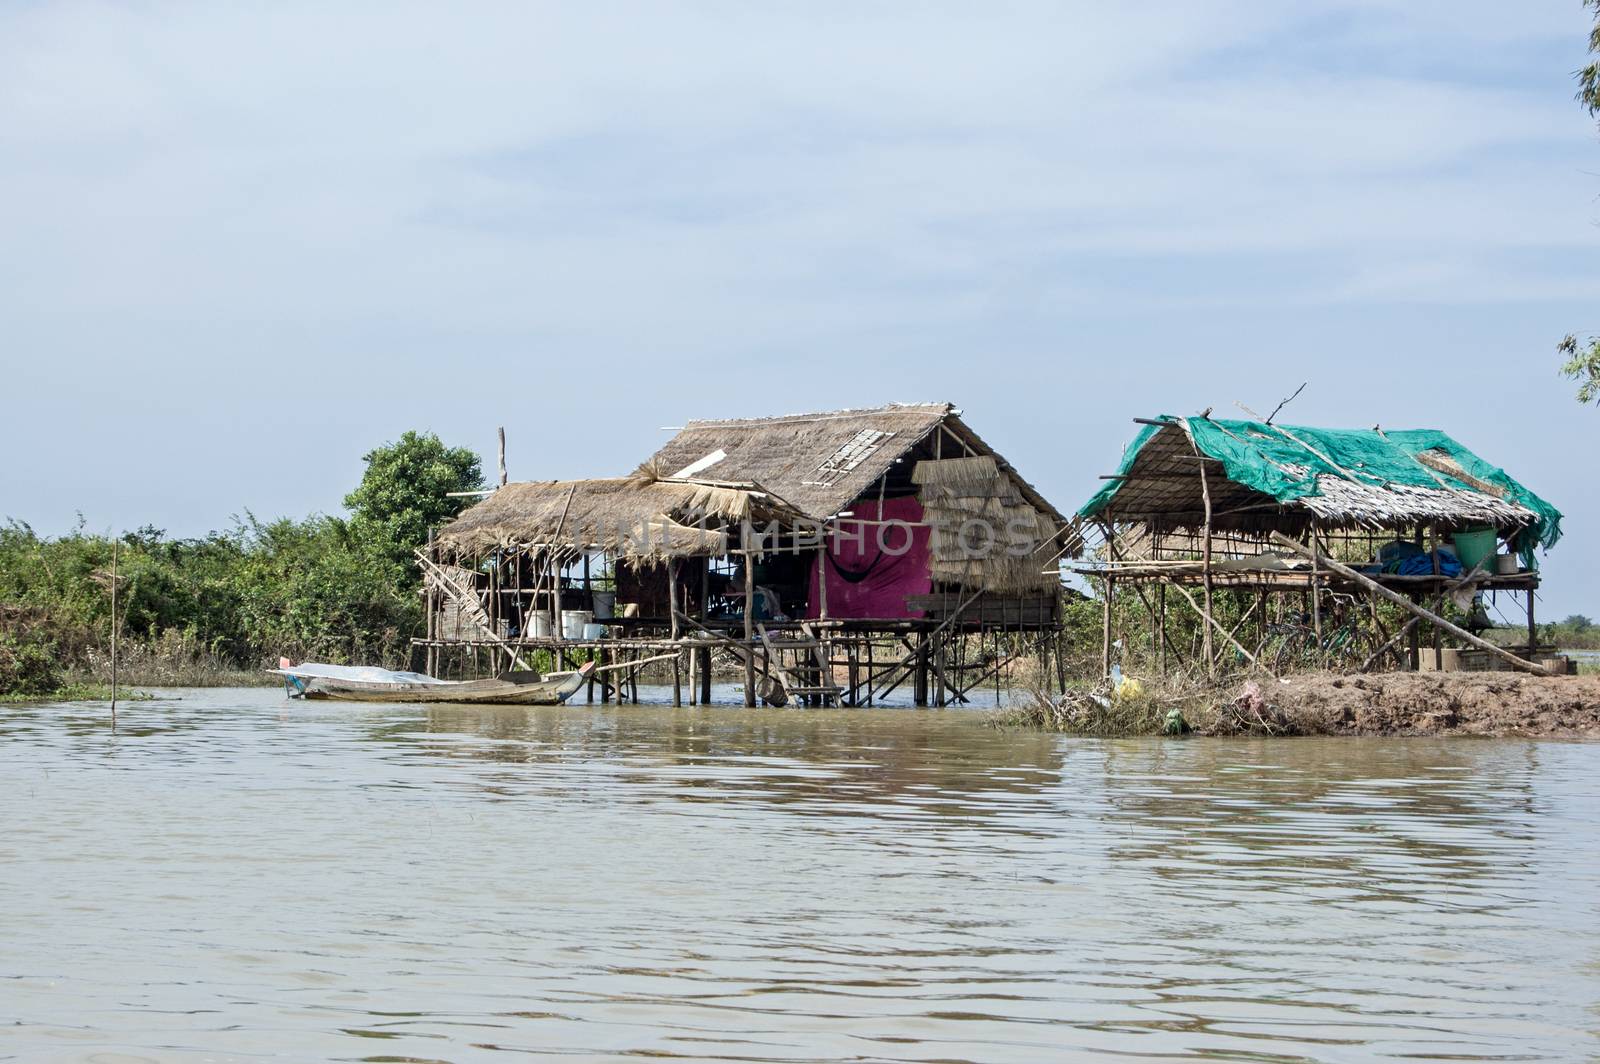 Kompong Phluk floating village, Cambodia by BasPhoto